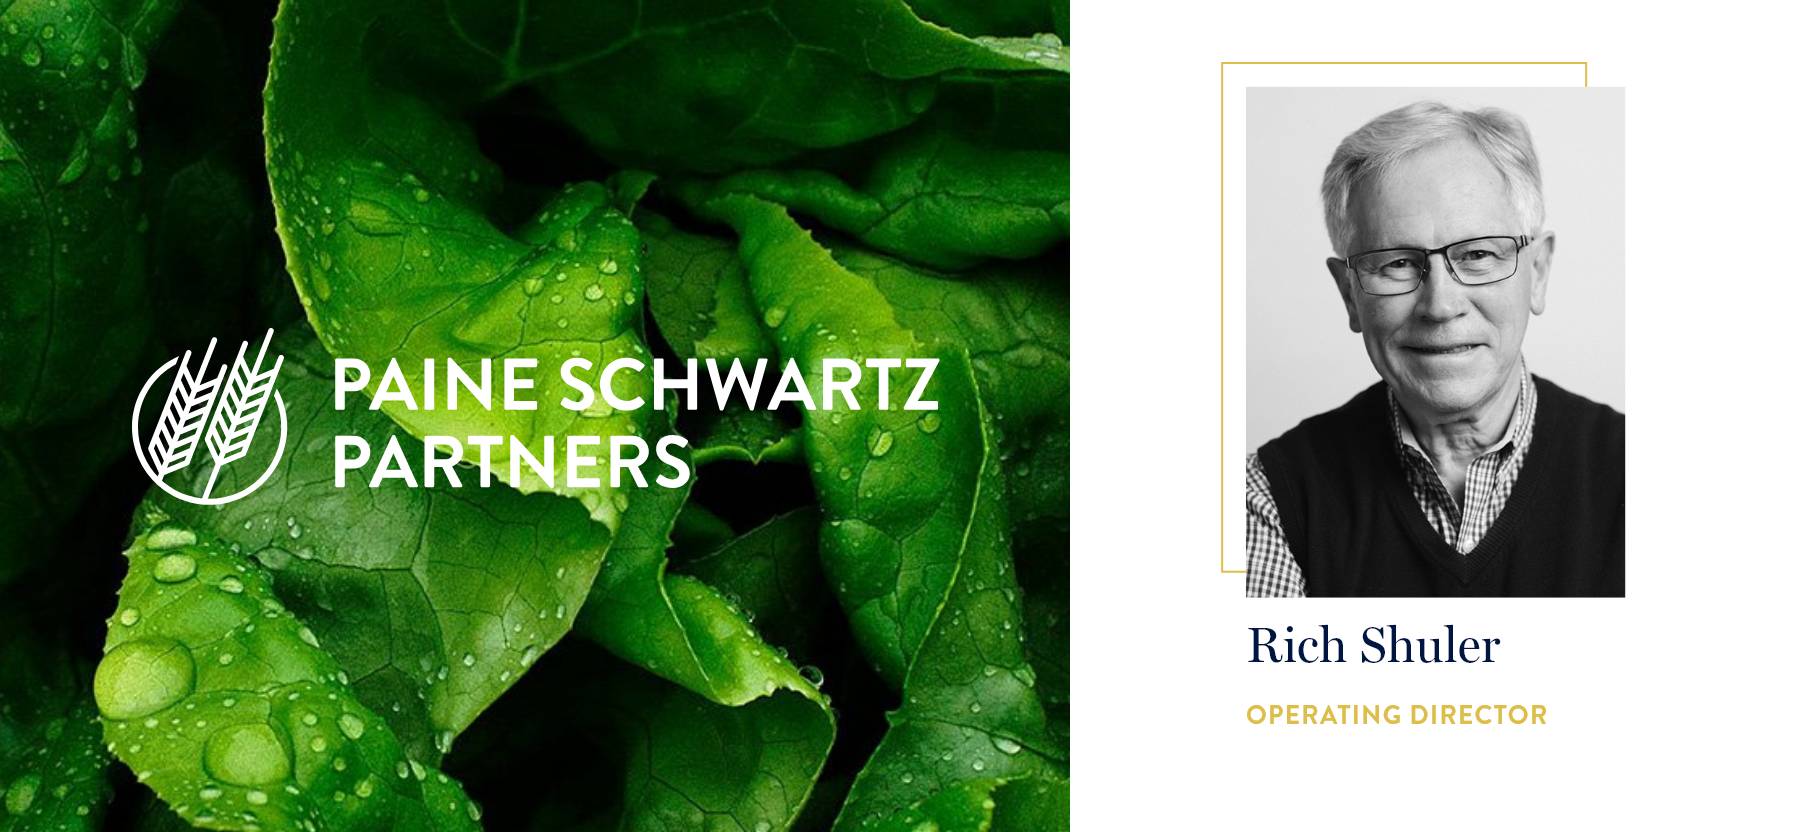 Paine Schwartz Partners Adds Richard Shuler as Operating Director@2x